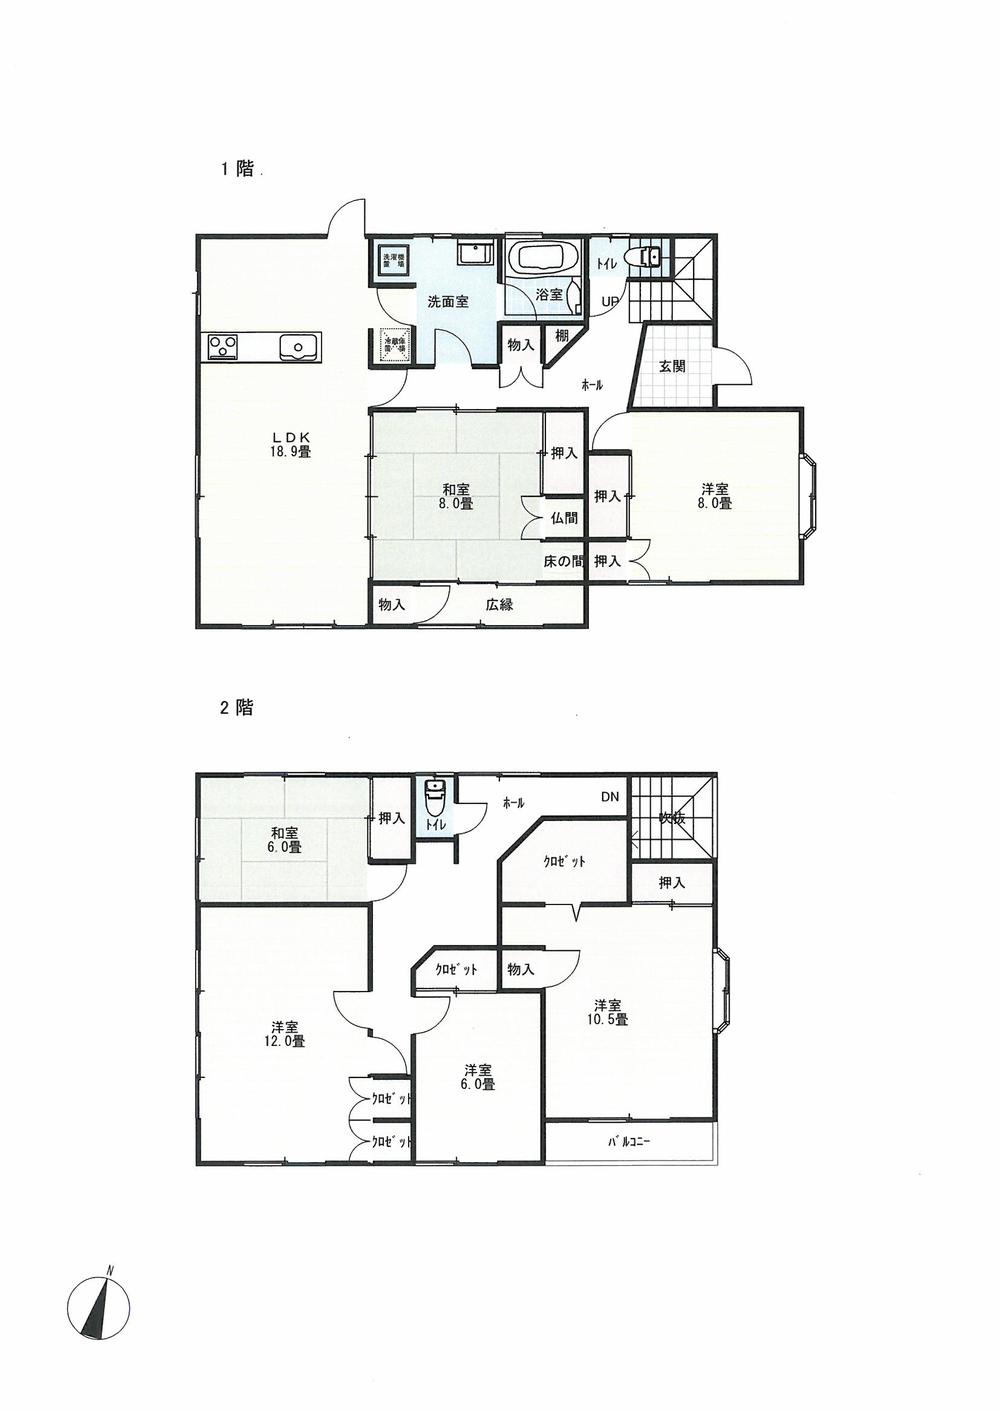 Floor plan. 22,980,000 yen, 6LDK, Land area 267.21 sq m , Building area 183.84 sq m